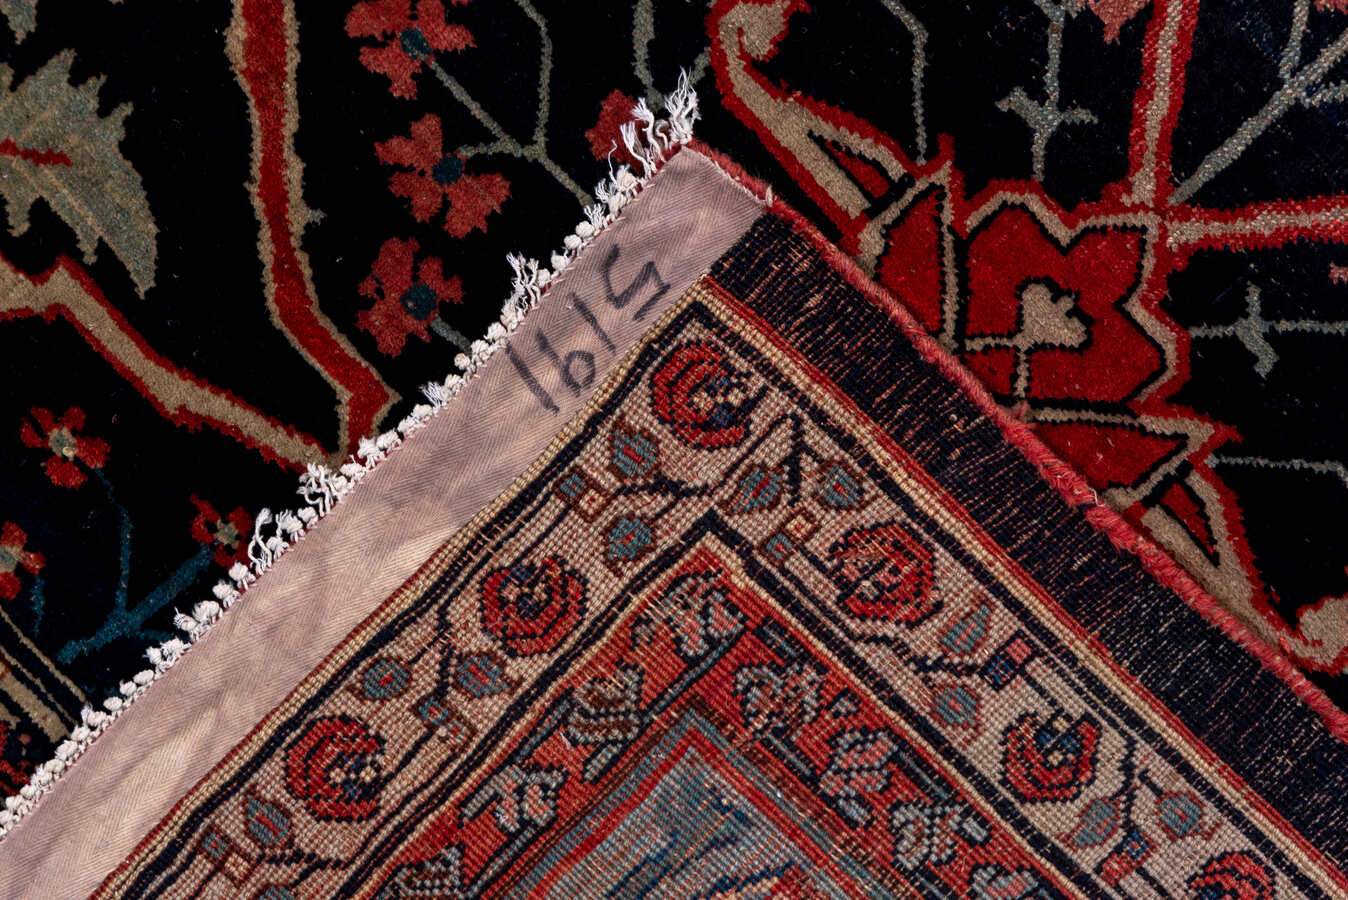 Antique bidjar Carpet - # 9223